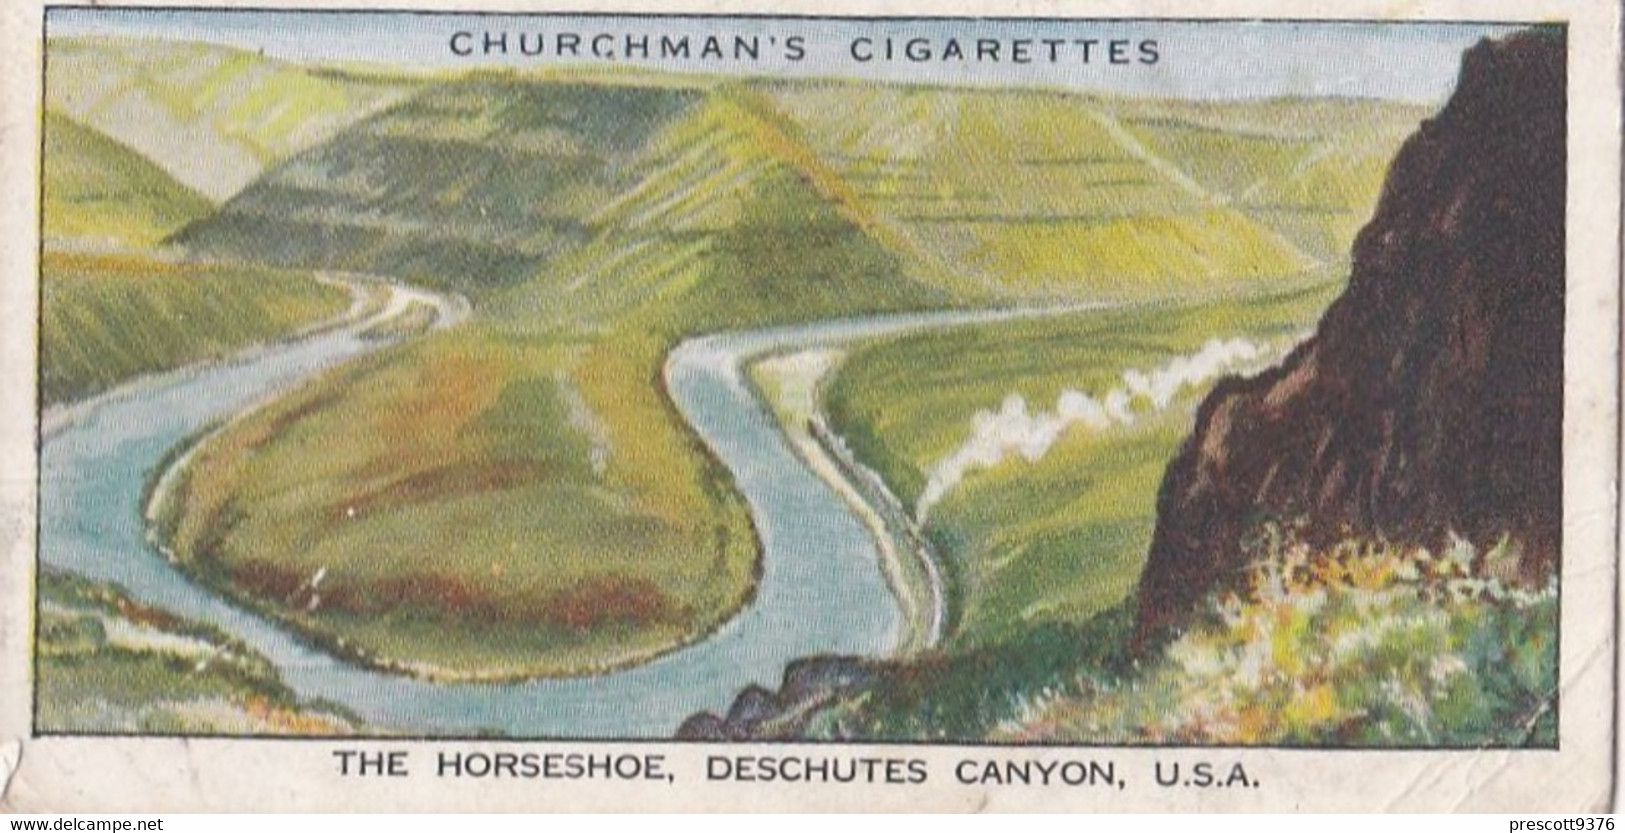 Wonderful Railway Travel, 1937 - 43 The Horseshoe Deschuttes Canyon, USA - Churchman Cigarette Card - Trains - Churchman